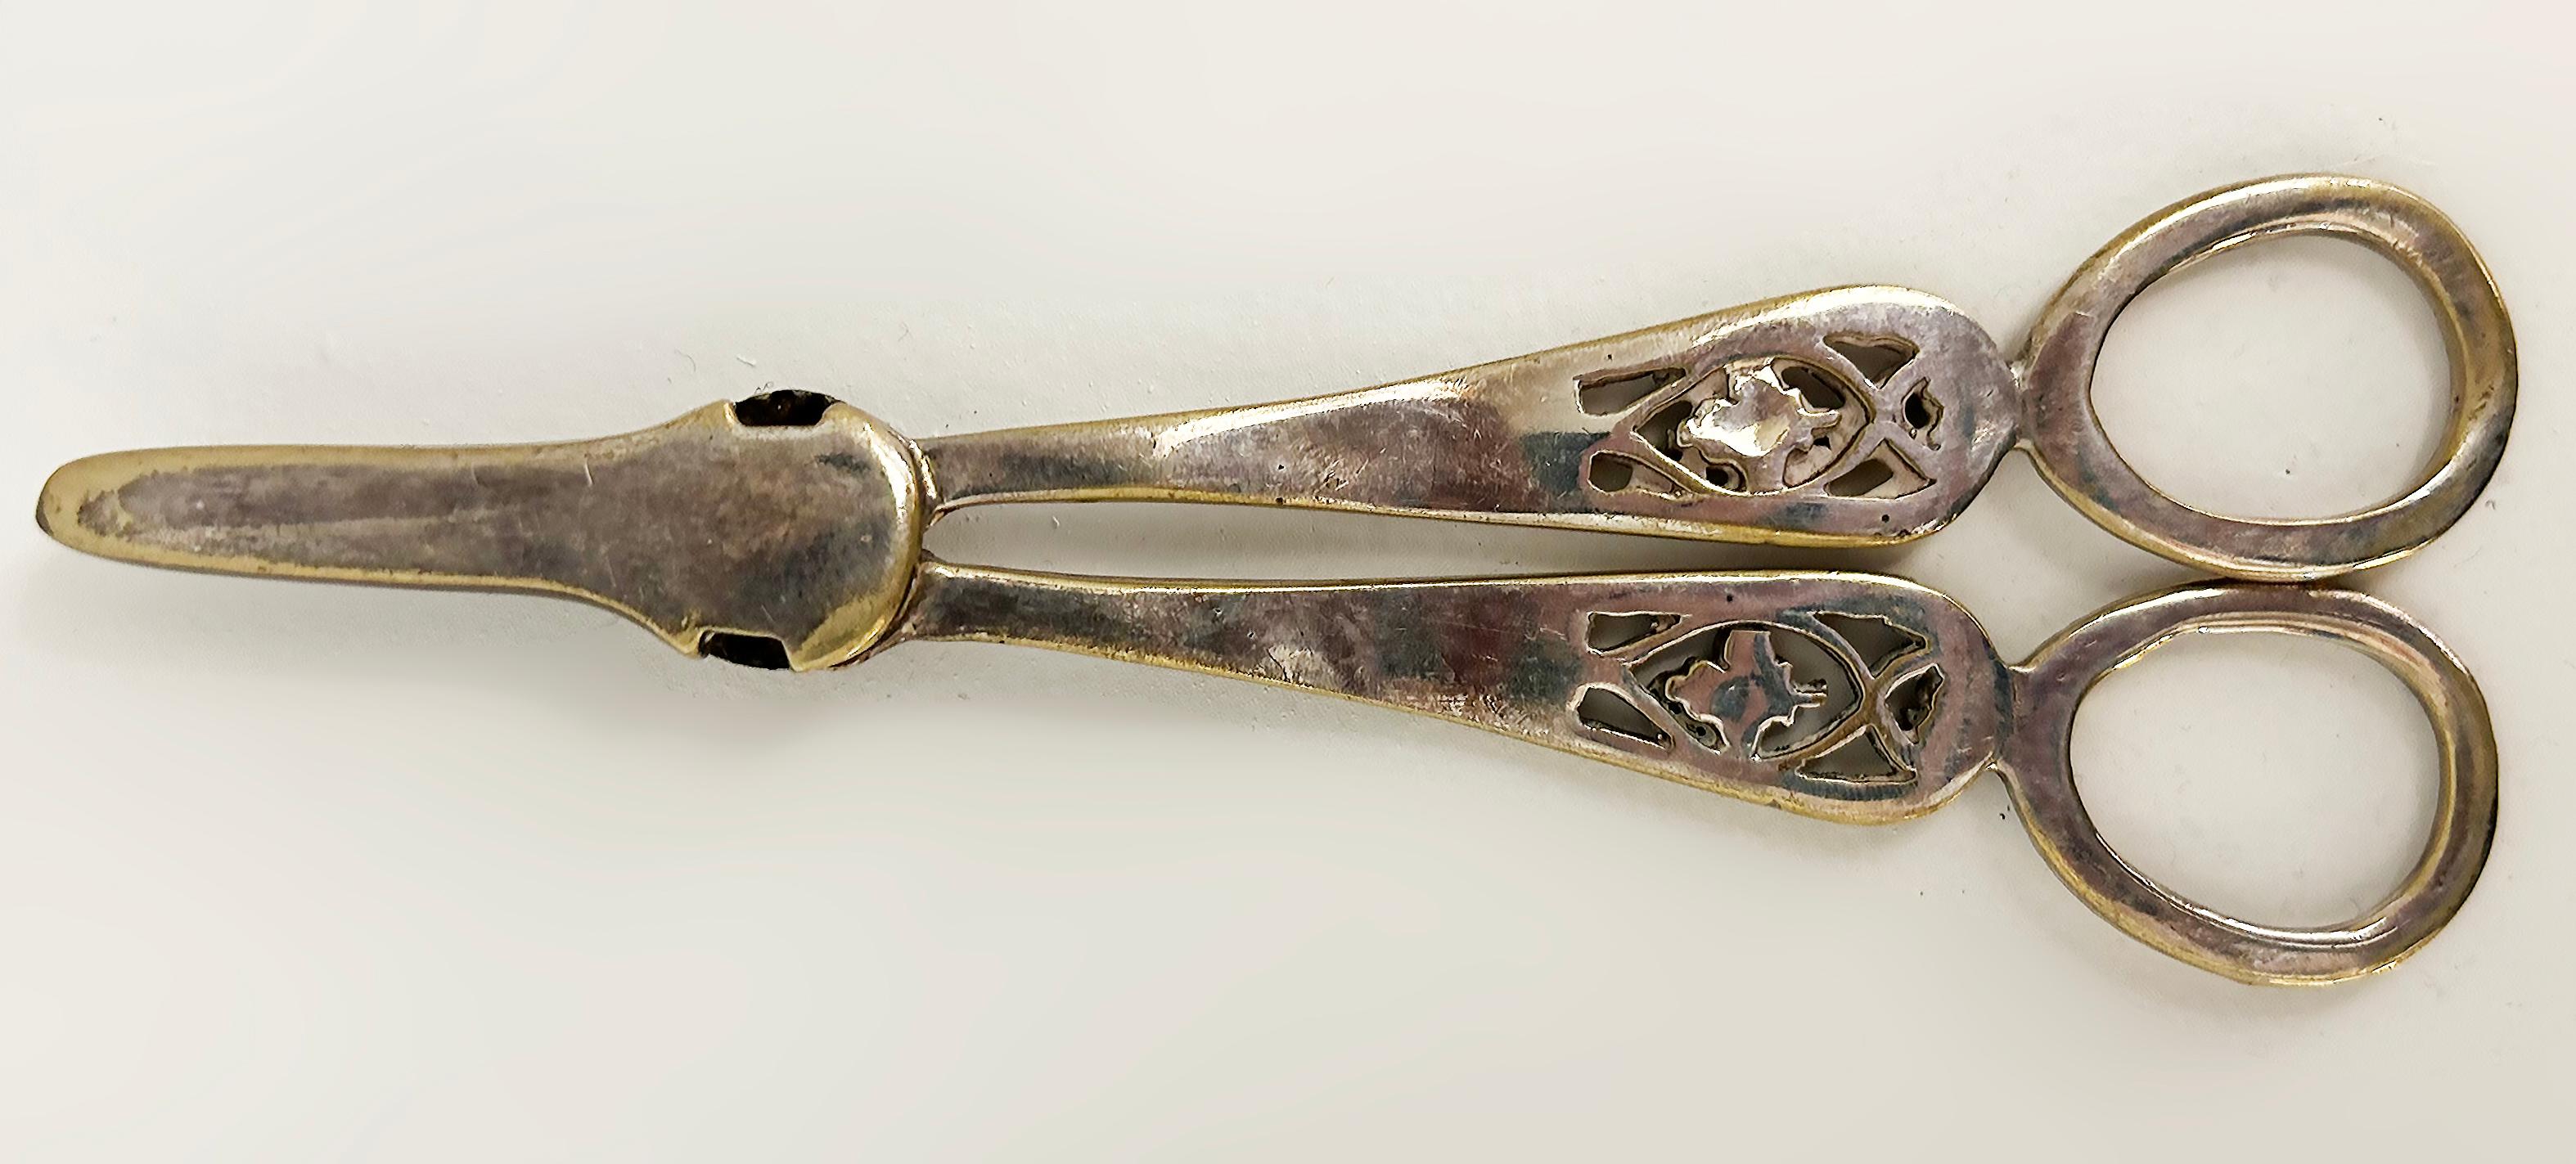 Antique Silver Plate Grape Scissors, Floral and Filigree Details For Sale 2